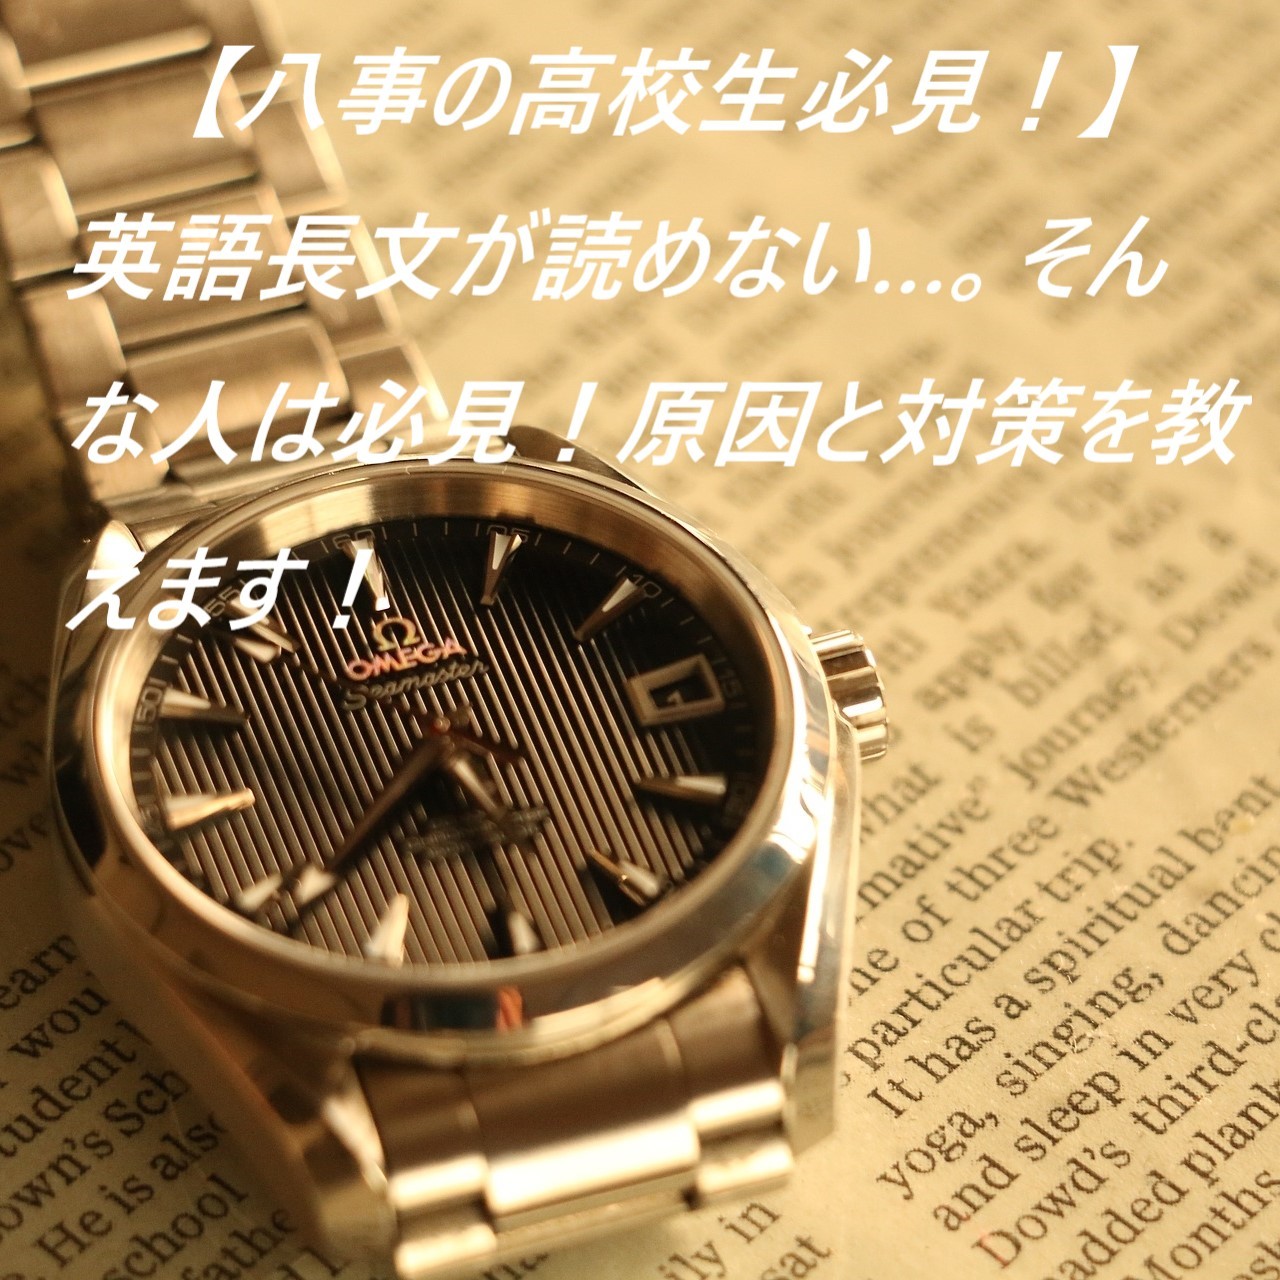 watch-3641553_1920